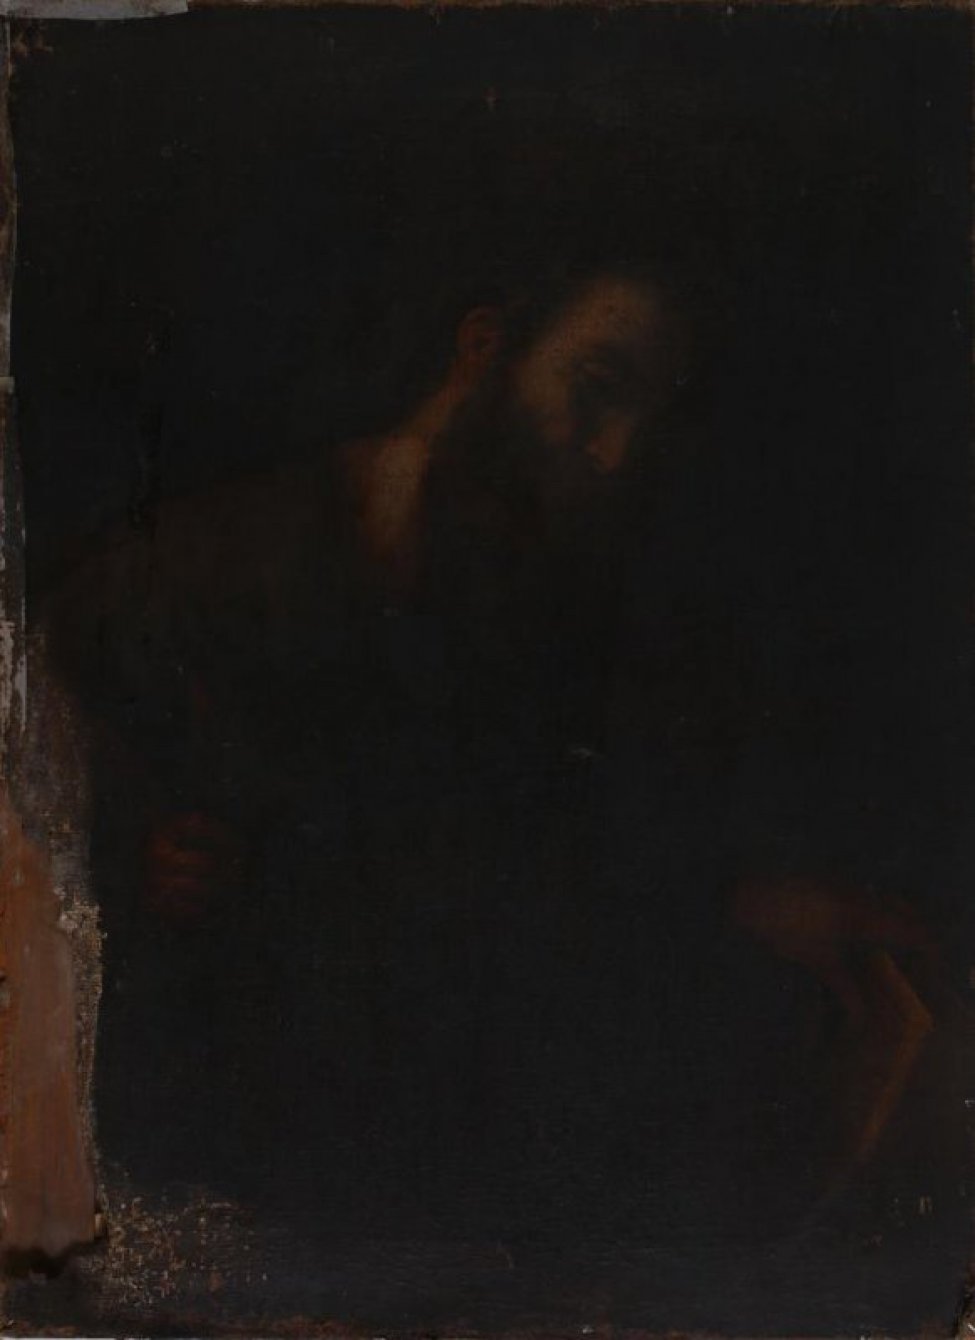 Изображен по пояс апостол с книгами в обеих руках. На нем темно-коричневая одежда. Голова наклонена вправо.